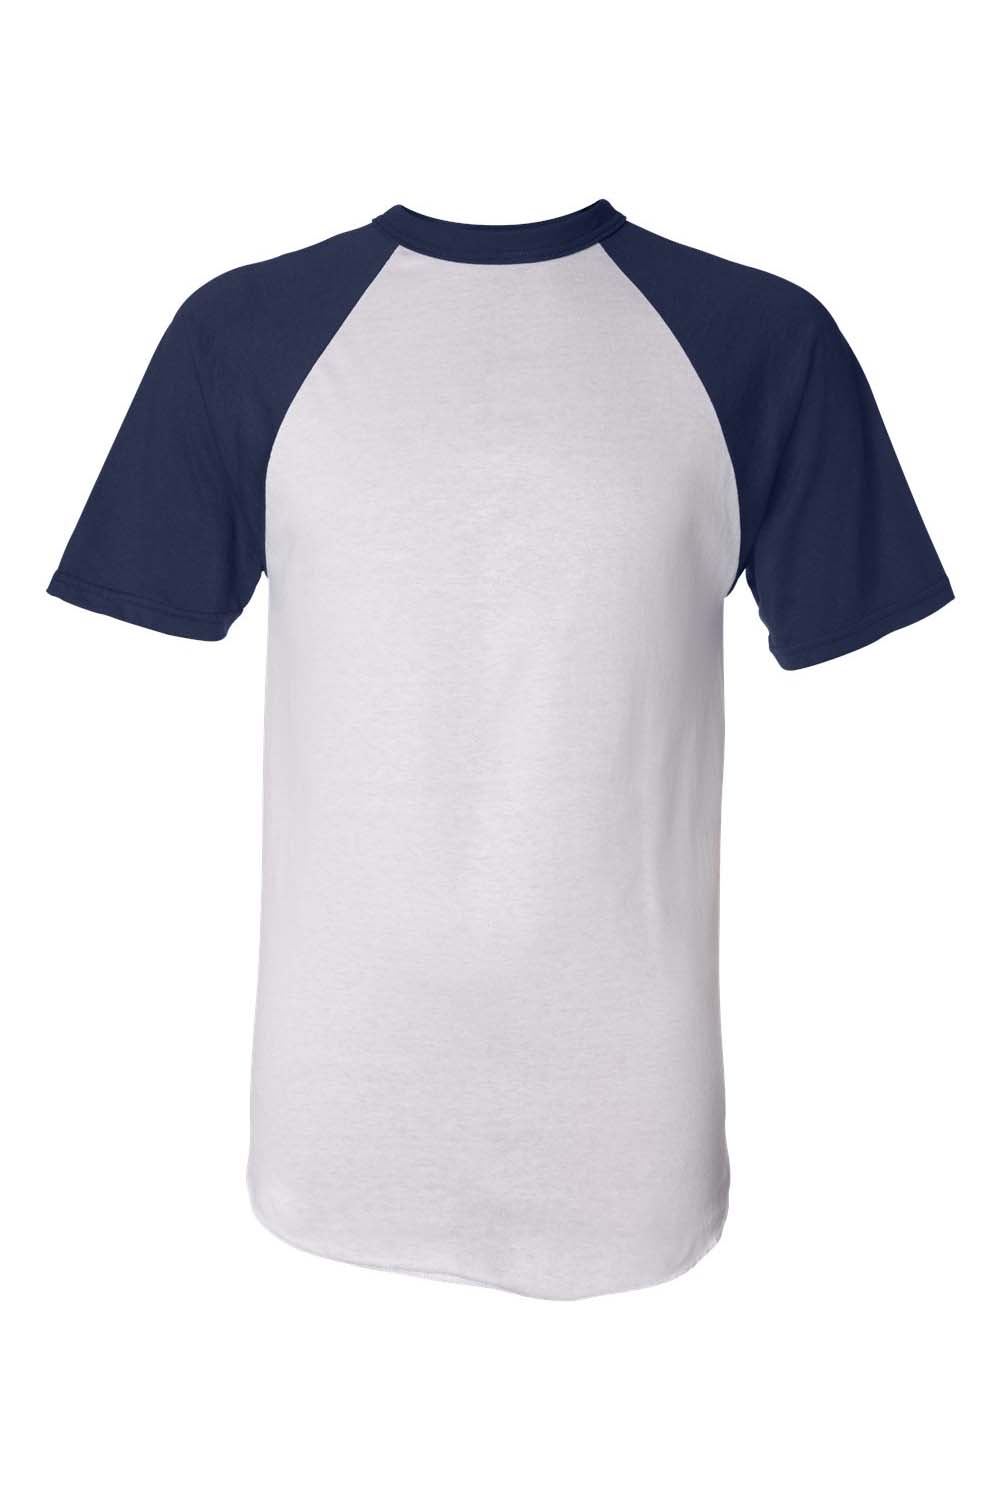 Augusta Sportswear 423 Mens Short Sleeve Crewneck T-Shirt White/Navy Blue Model Flat Front